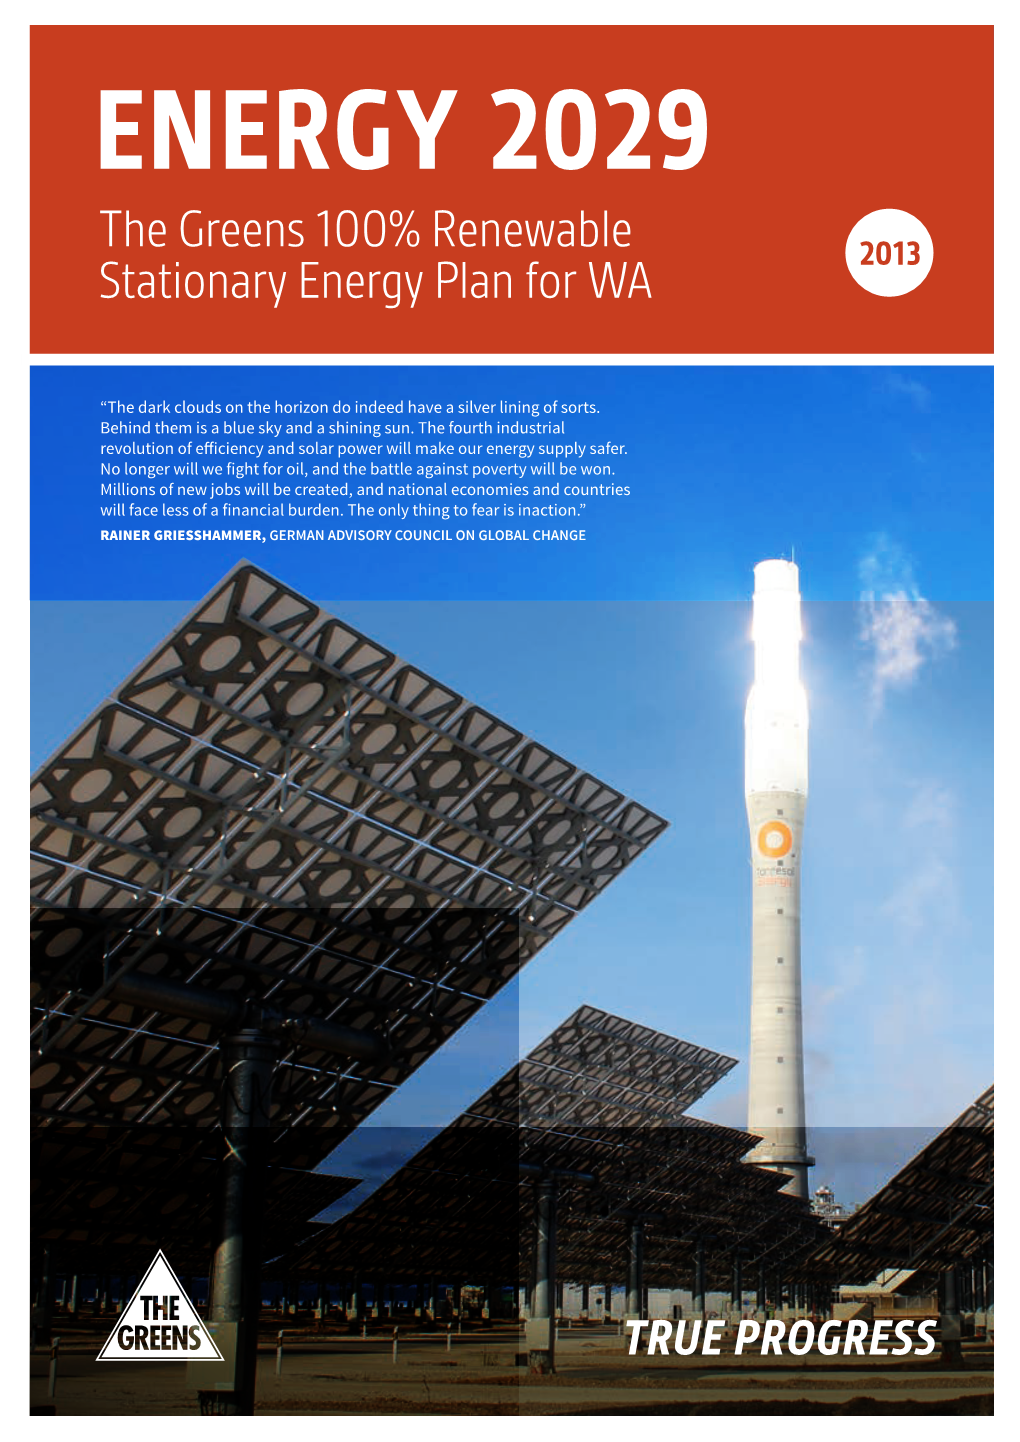 The Greens 100% Renewable Stationary Energy Plan for WA 2013